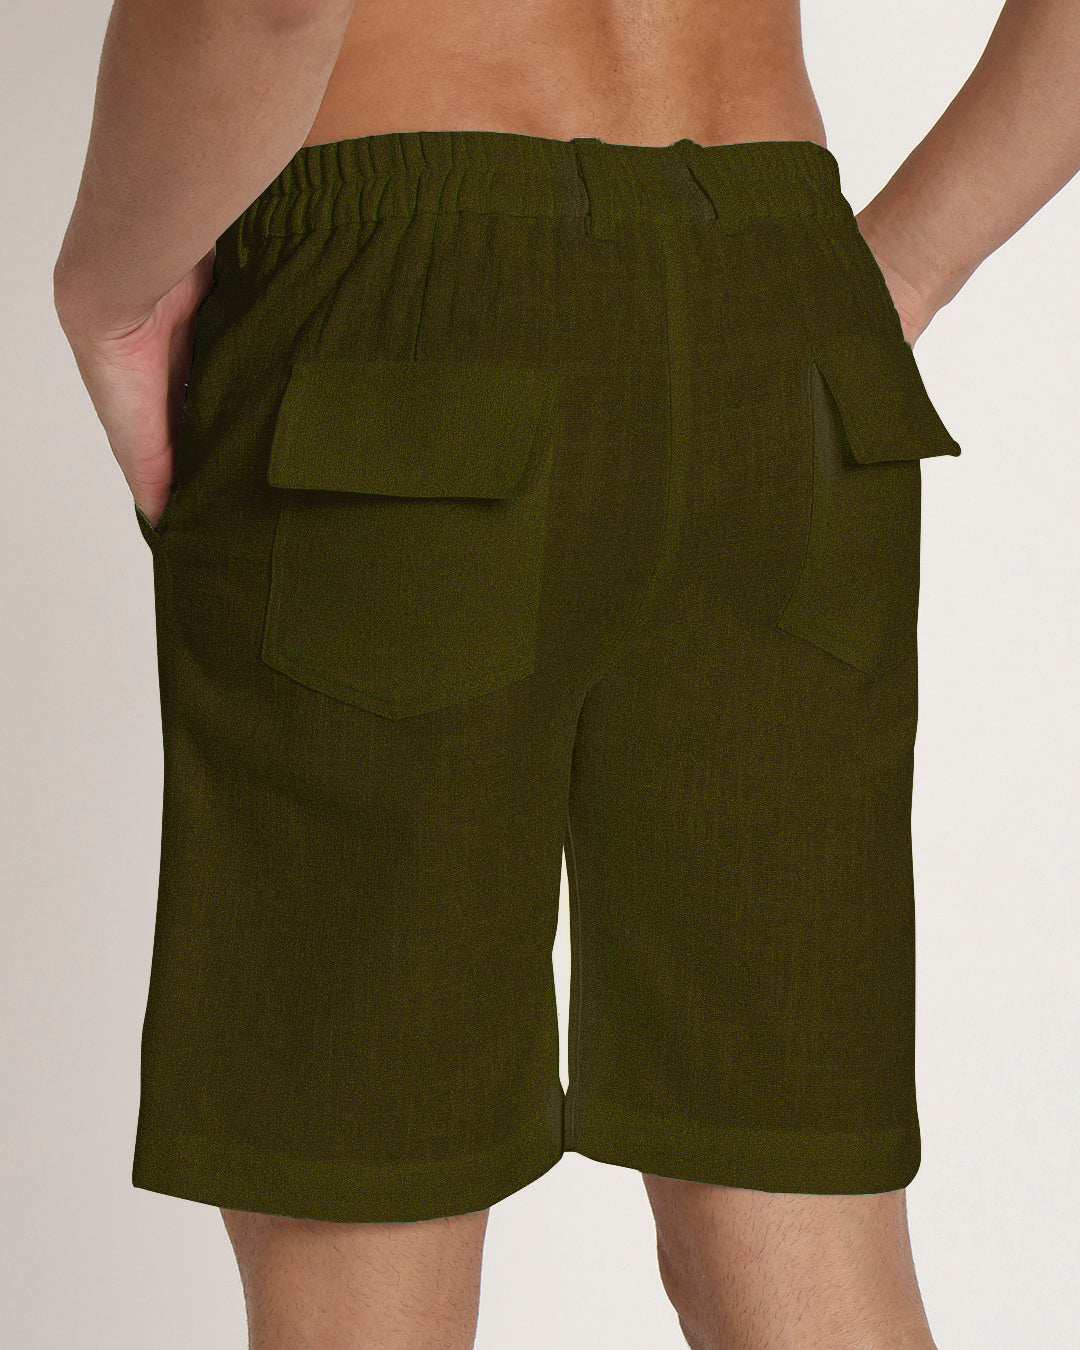 Patch Pocket Playtime Olive Green Men's Shorts